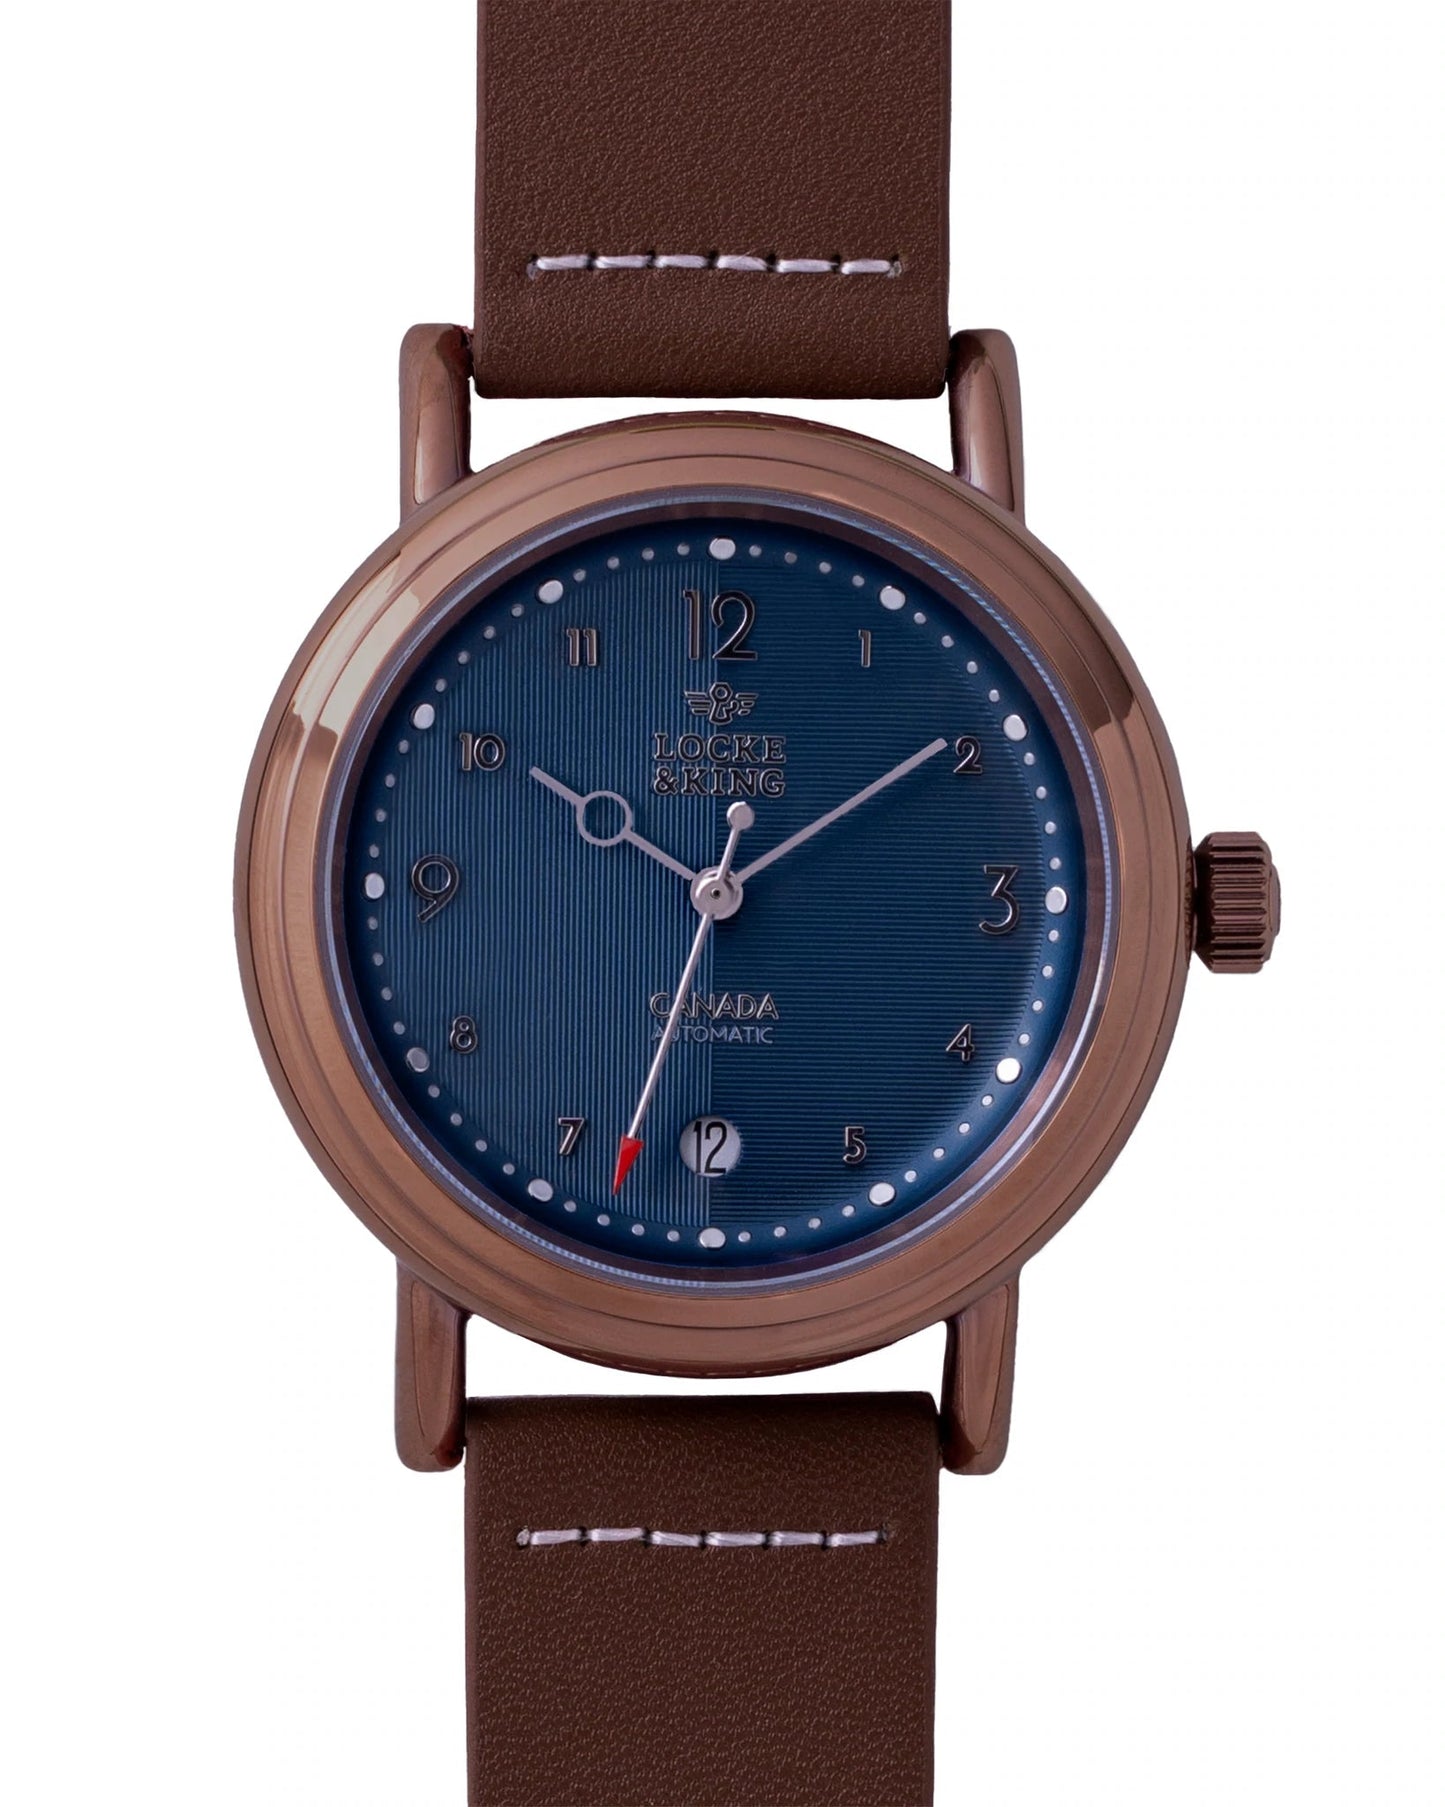 Locke & King -The Ossington - Copper & "Oxidized" Blue - Maple City Timepieces